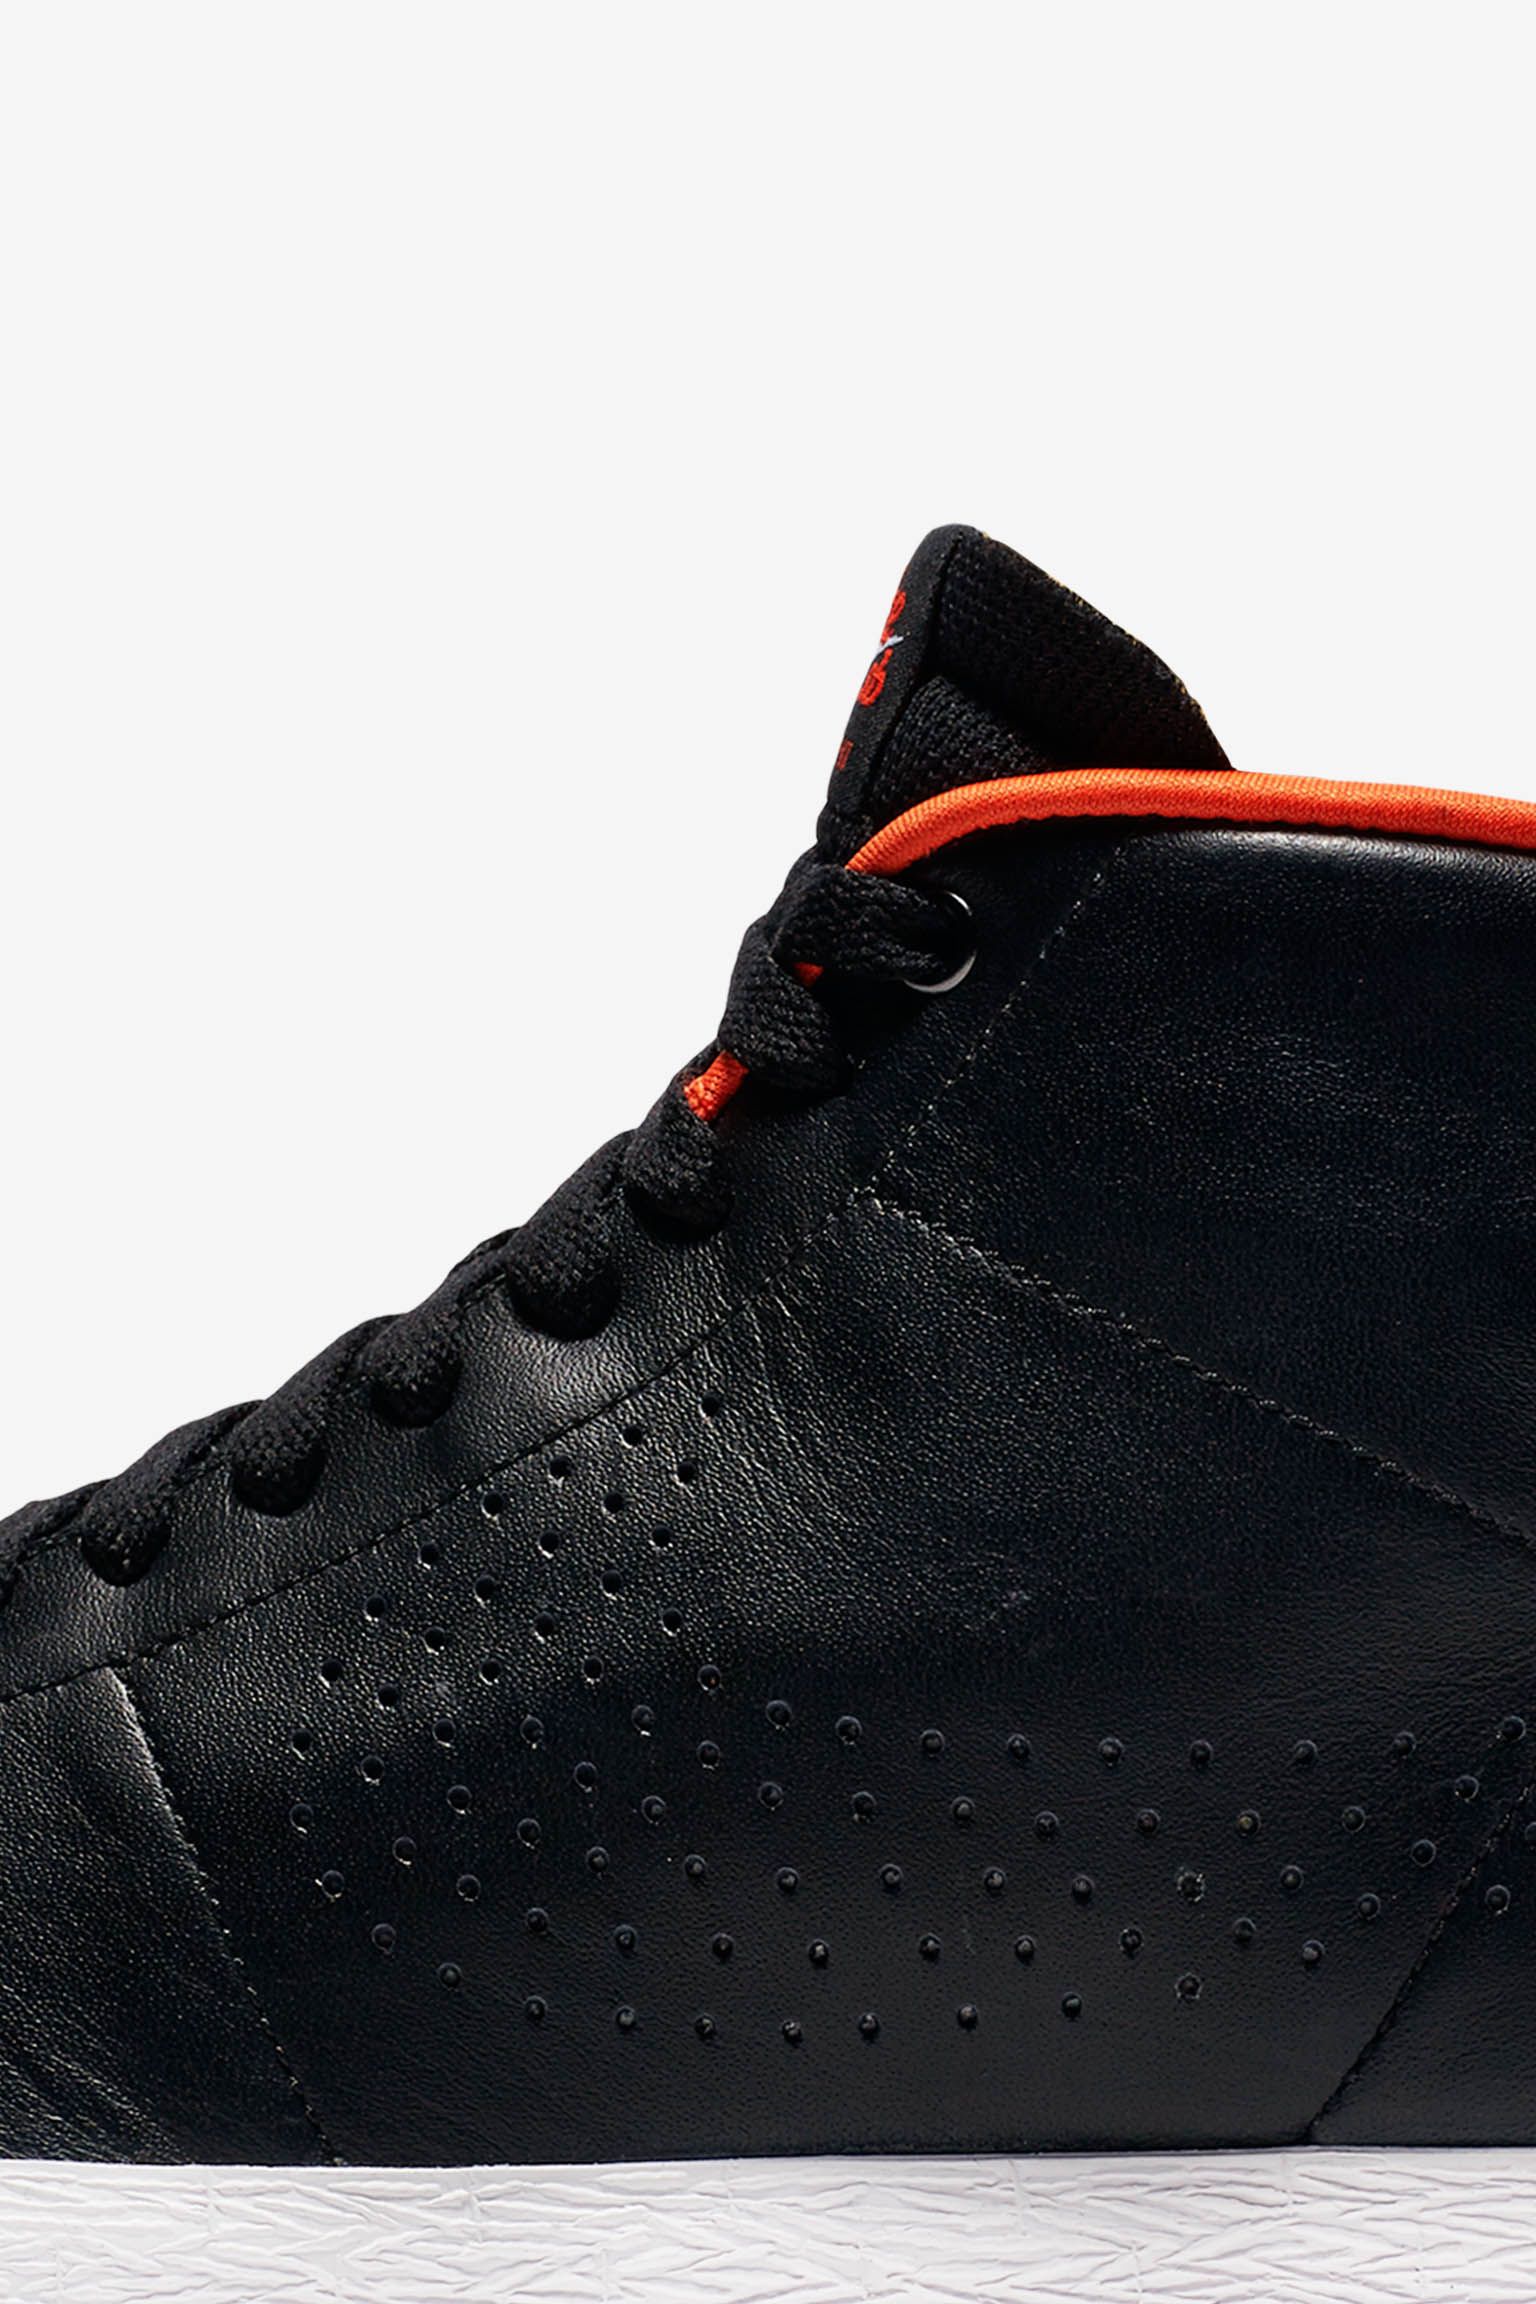 Nike SB Blazer Mid XT 'Donny' Release Date. Nike SNKRS قربه